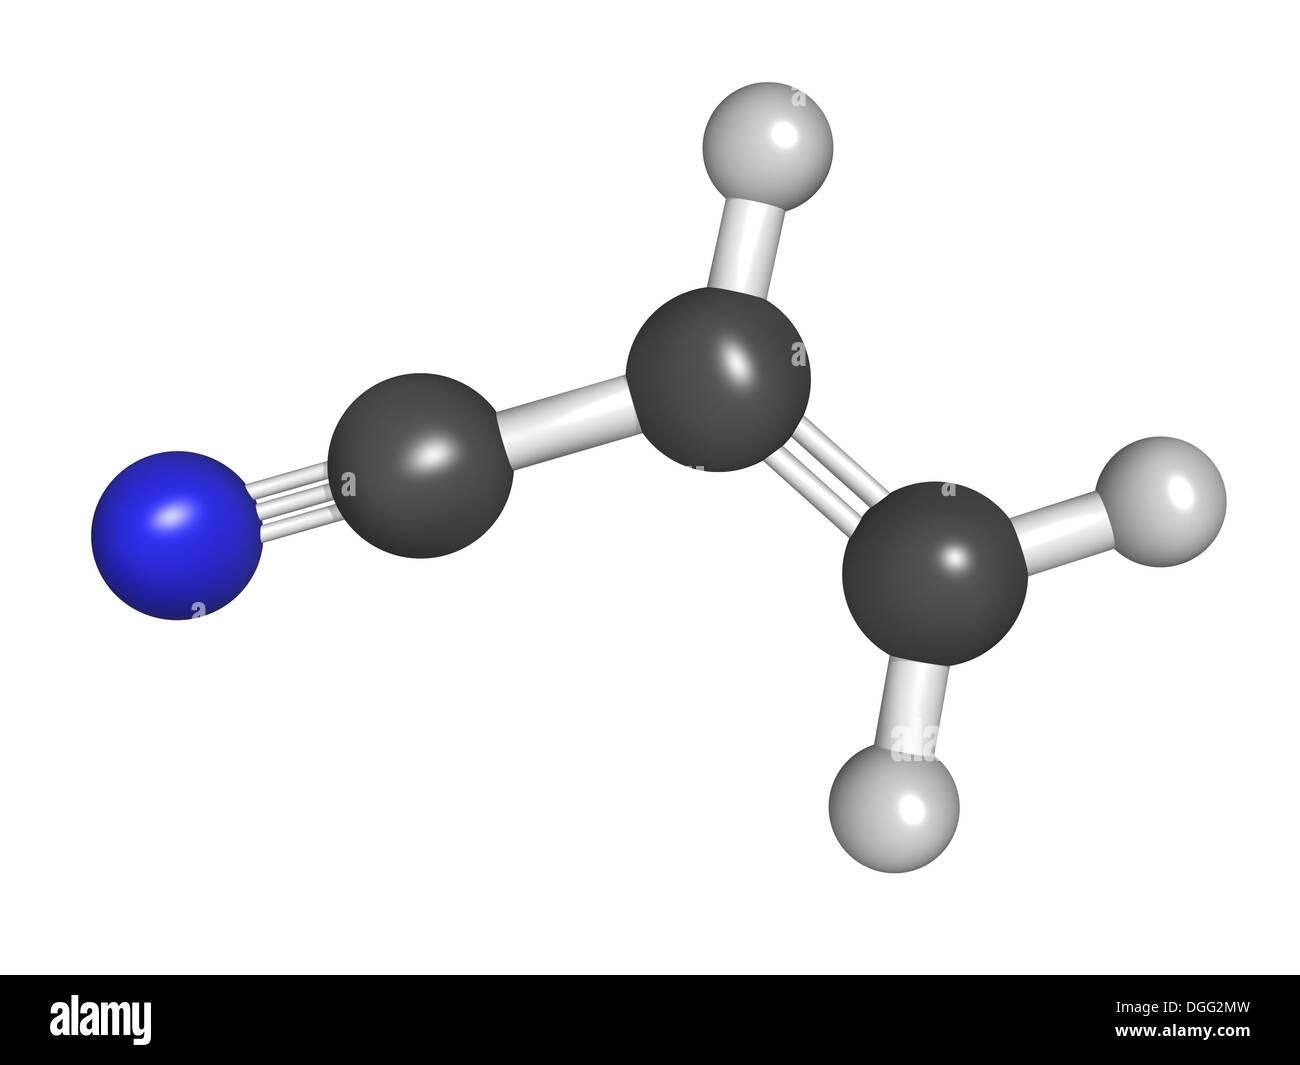 ABS (Acrylnitril-Butadien-Styrol)